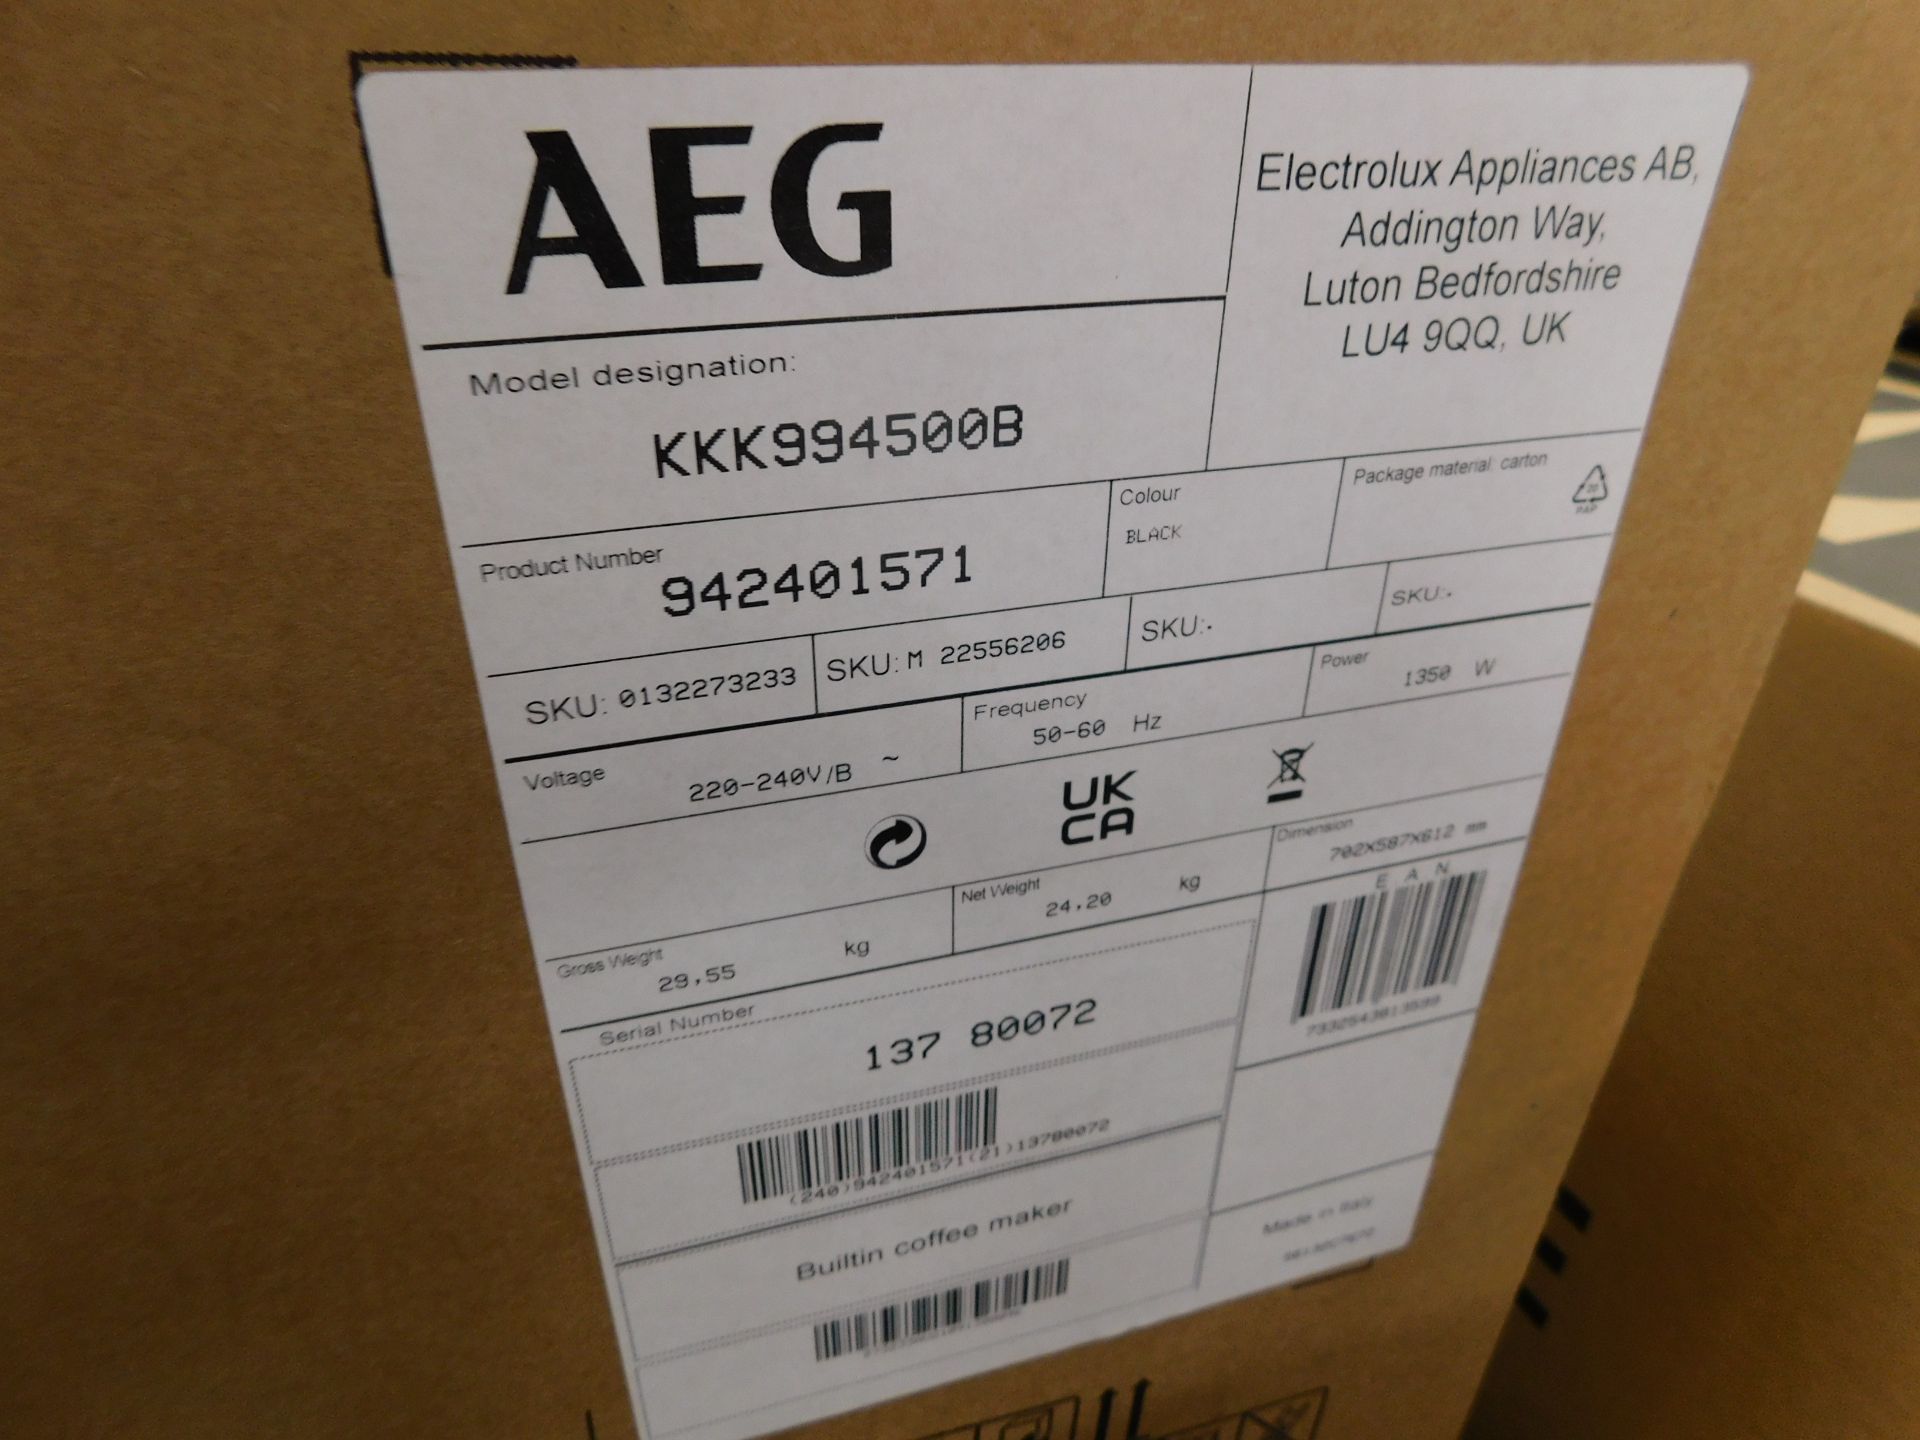 AEG KKK994500B Built-In Built-In Coffee Maker, Serial Number: 13780072 (Location Walsall. Please - Image 3 of 3